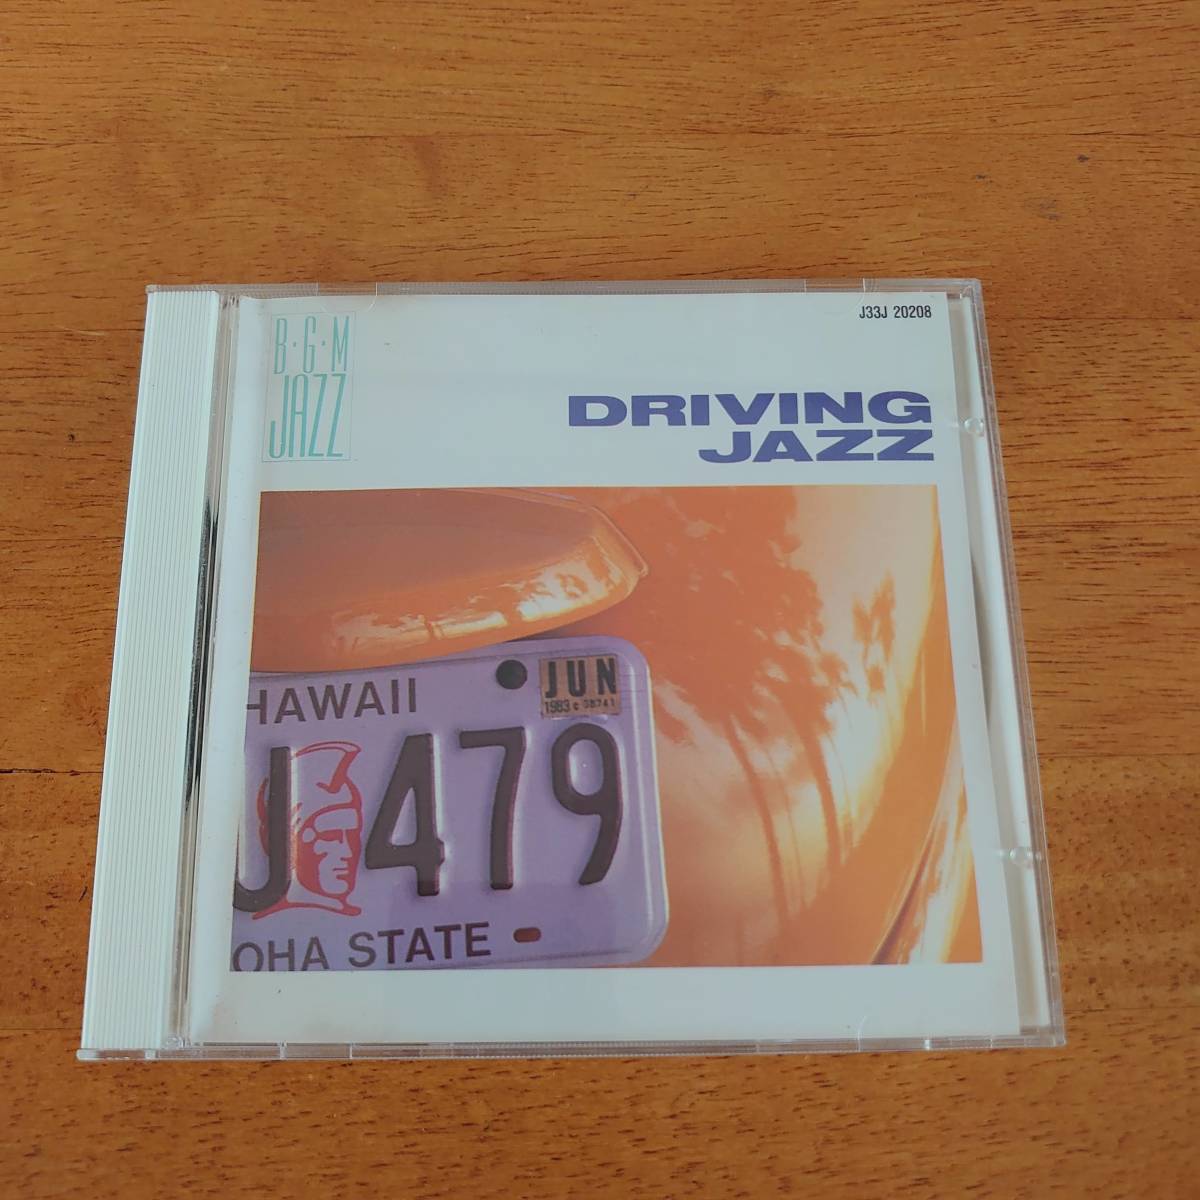 DRIVING JAZZ(BGM JAZZ SERIES) 車で聴くジャズ BGMジャズ・シリーズ3 【CD】_画像1